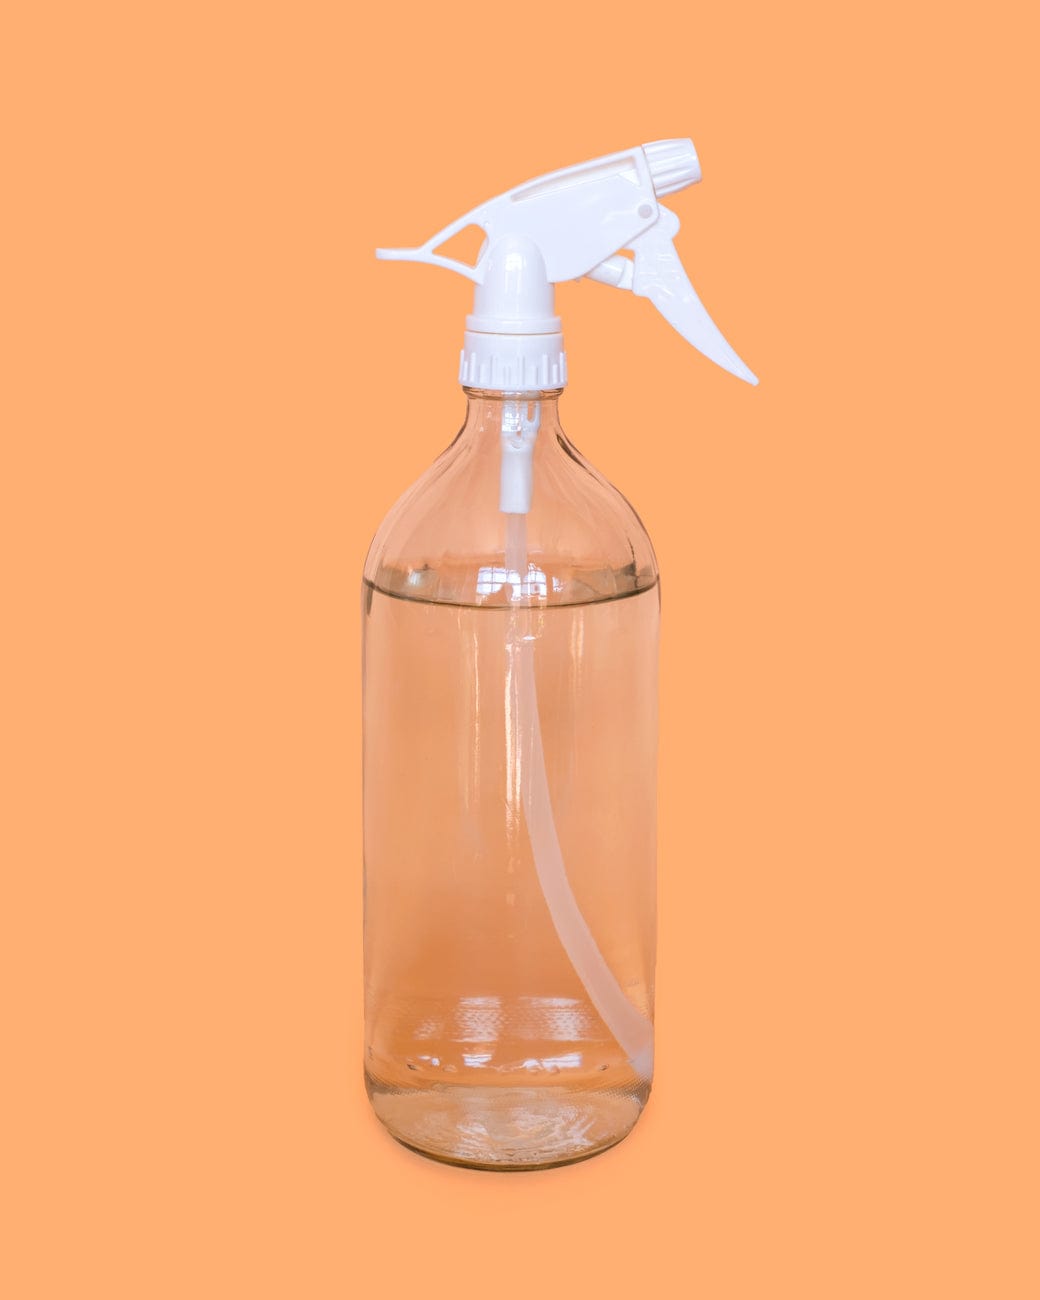 Great Value All Purpose Plastic Spray Bottle, 32 oz.